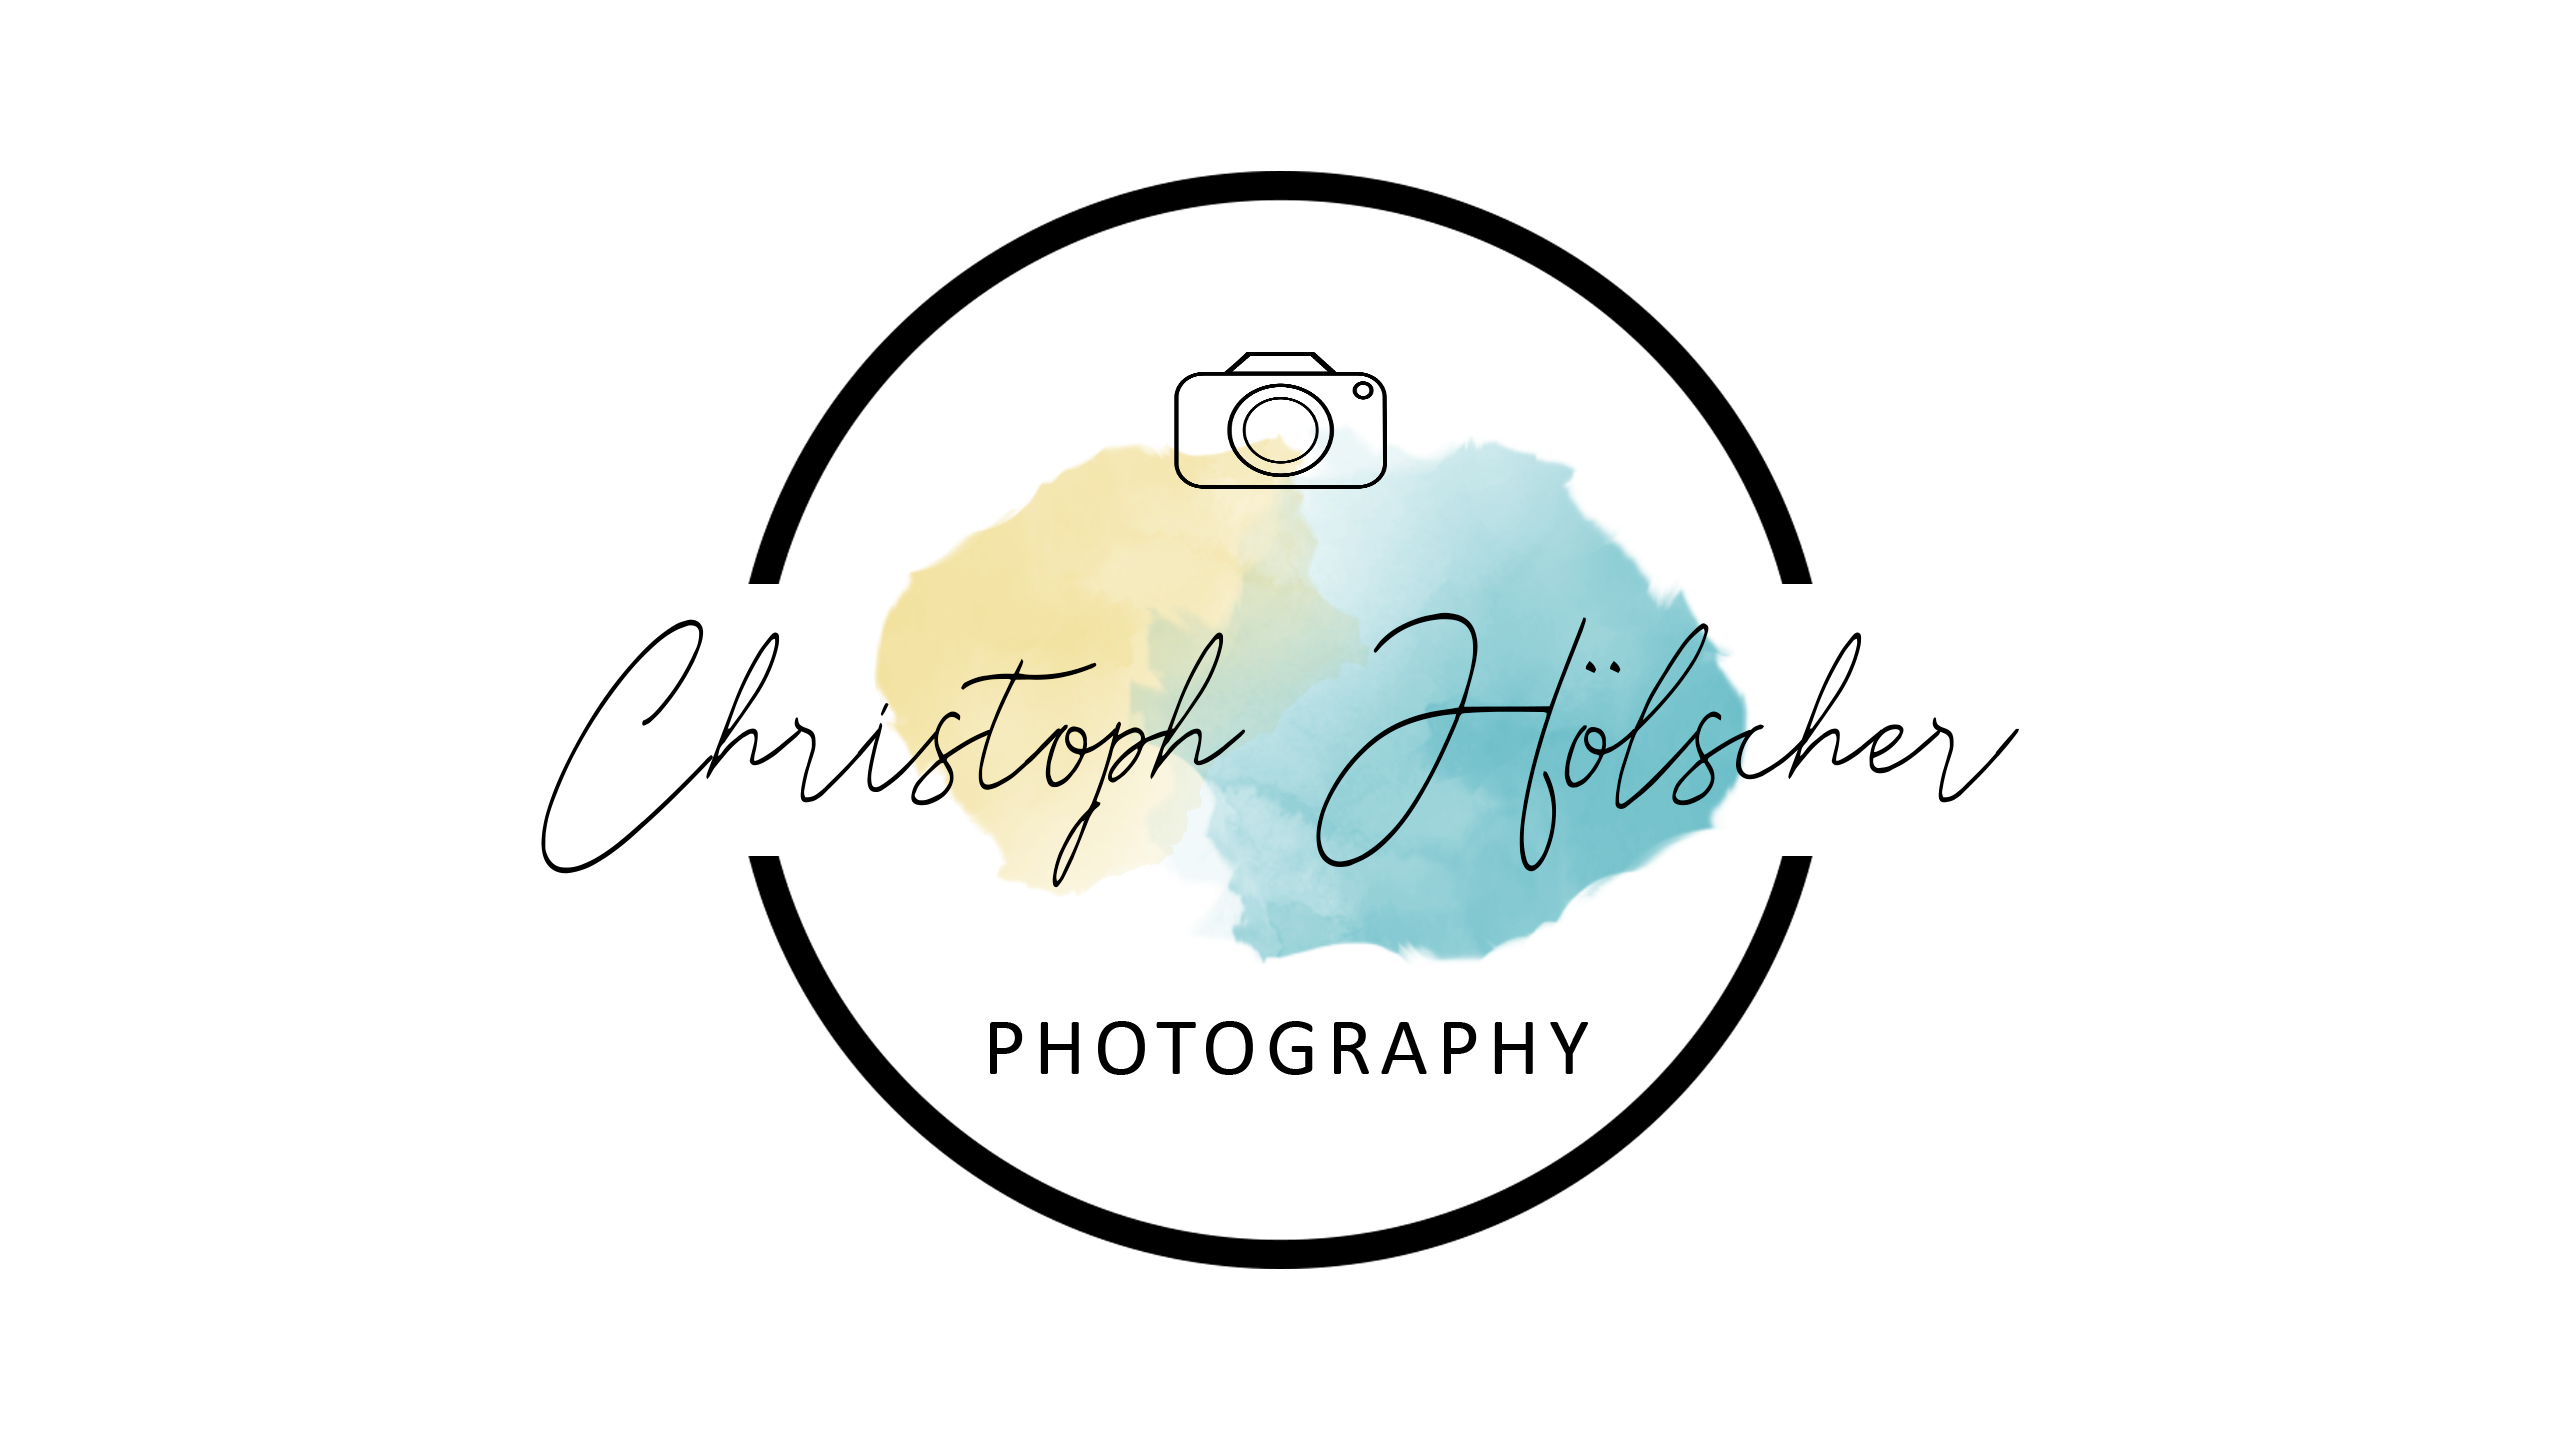 Christoph Hölscher Photography Logo